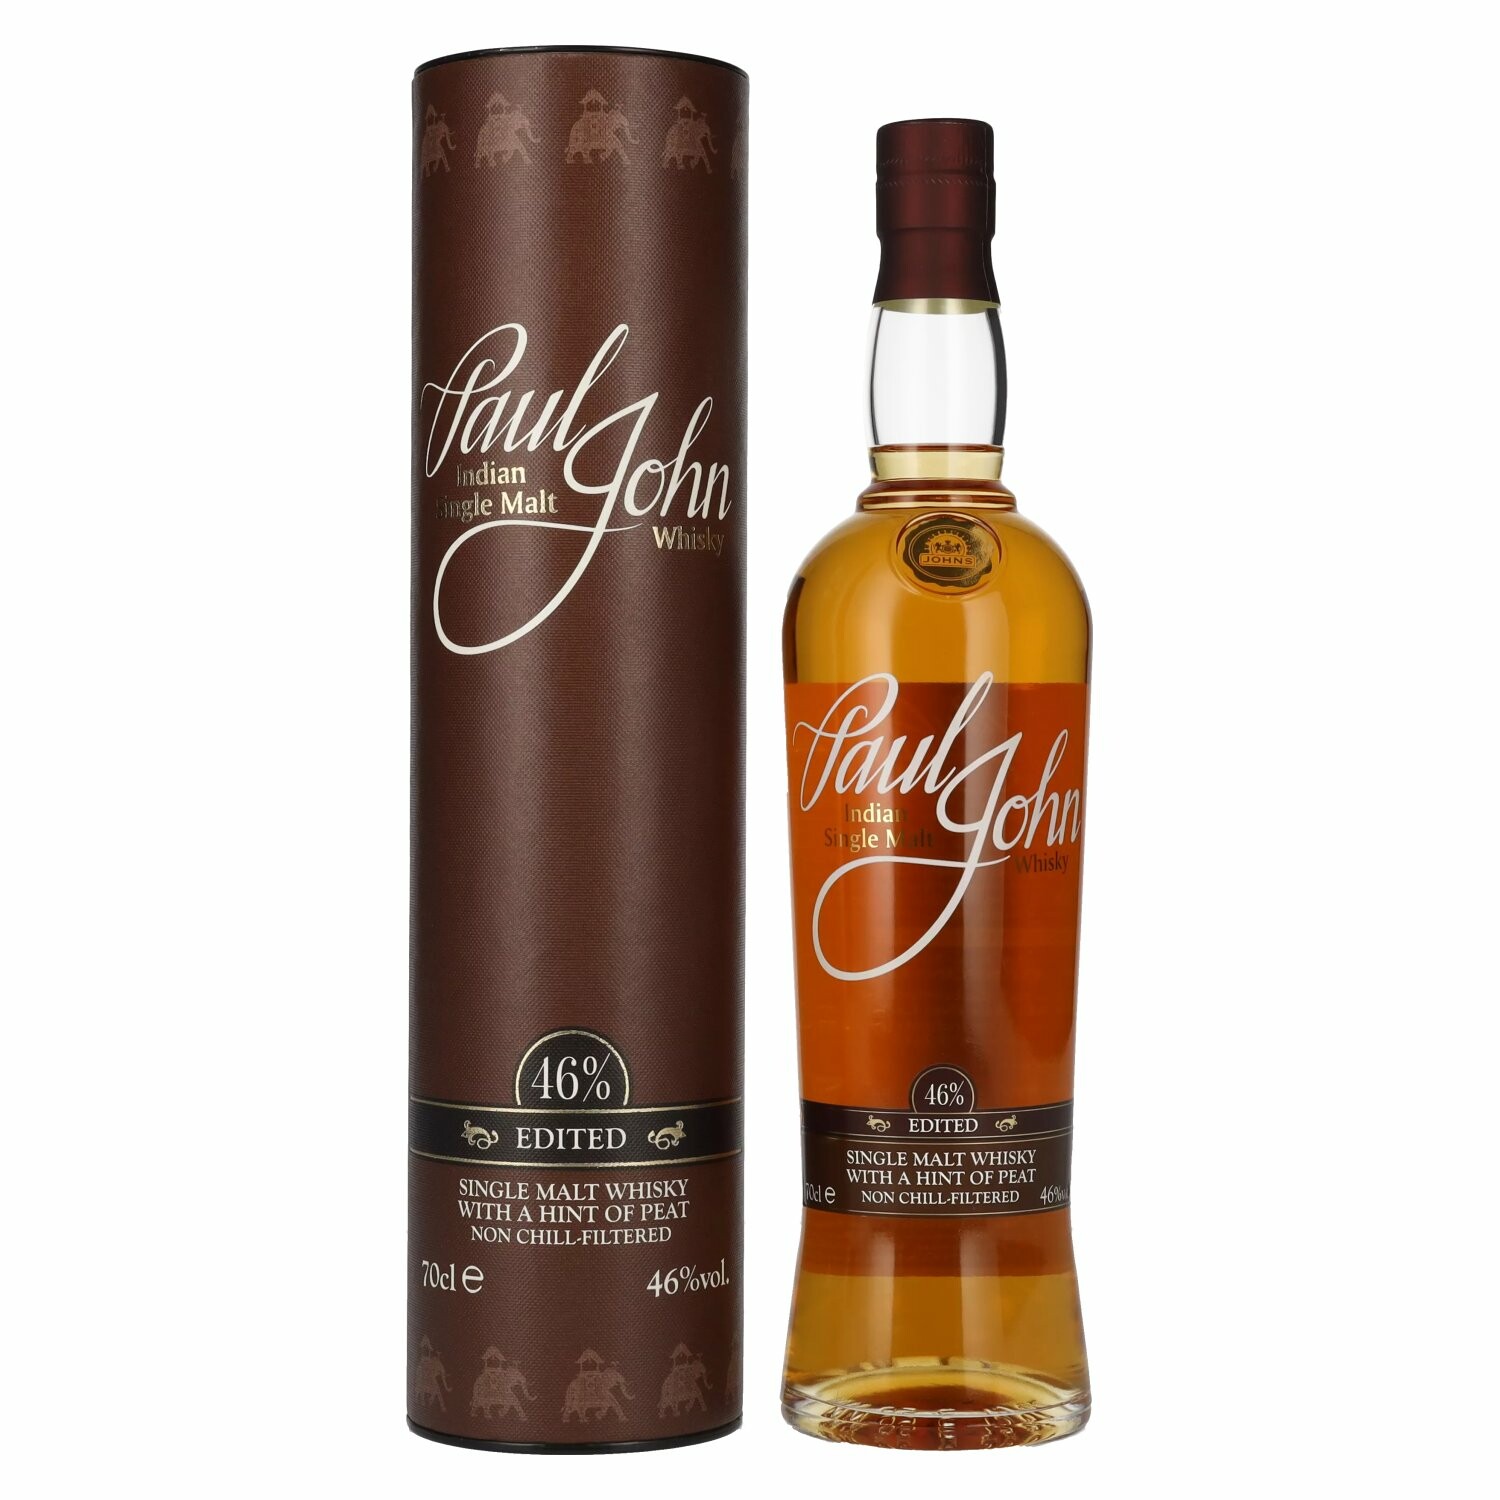 Paul John EDITED Indian Single Malt Whisky 46% Vol. 0,7l in Giftbox